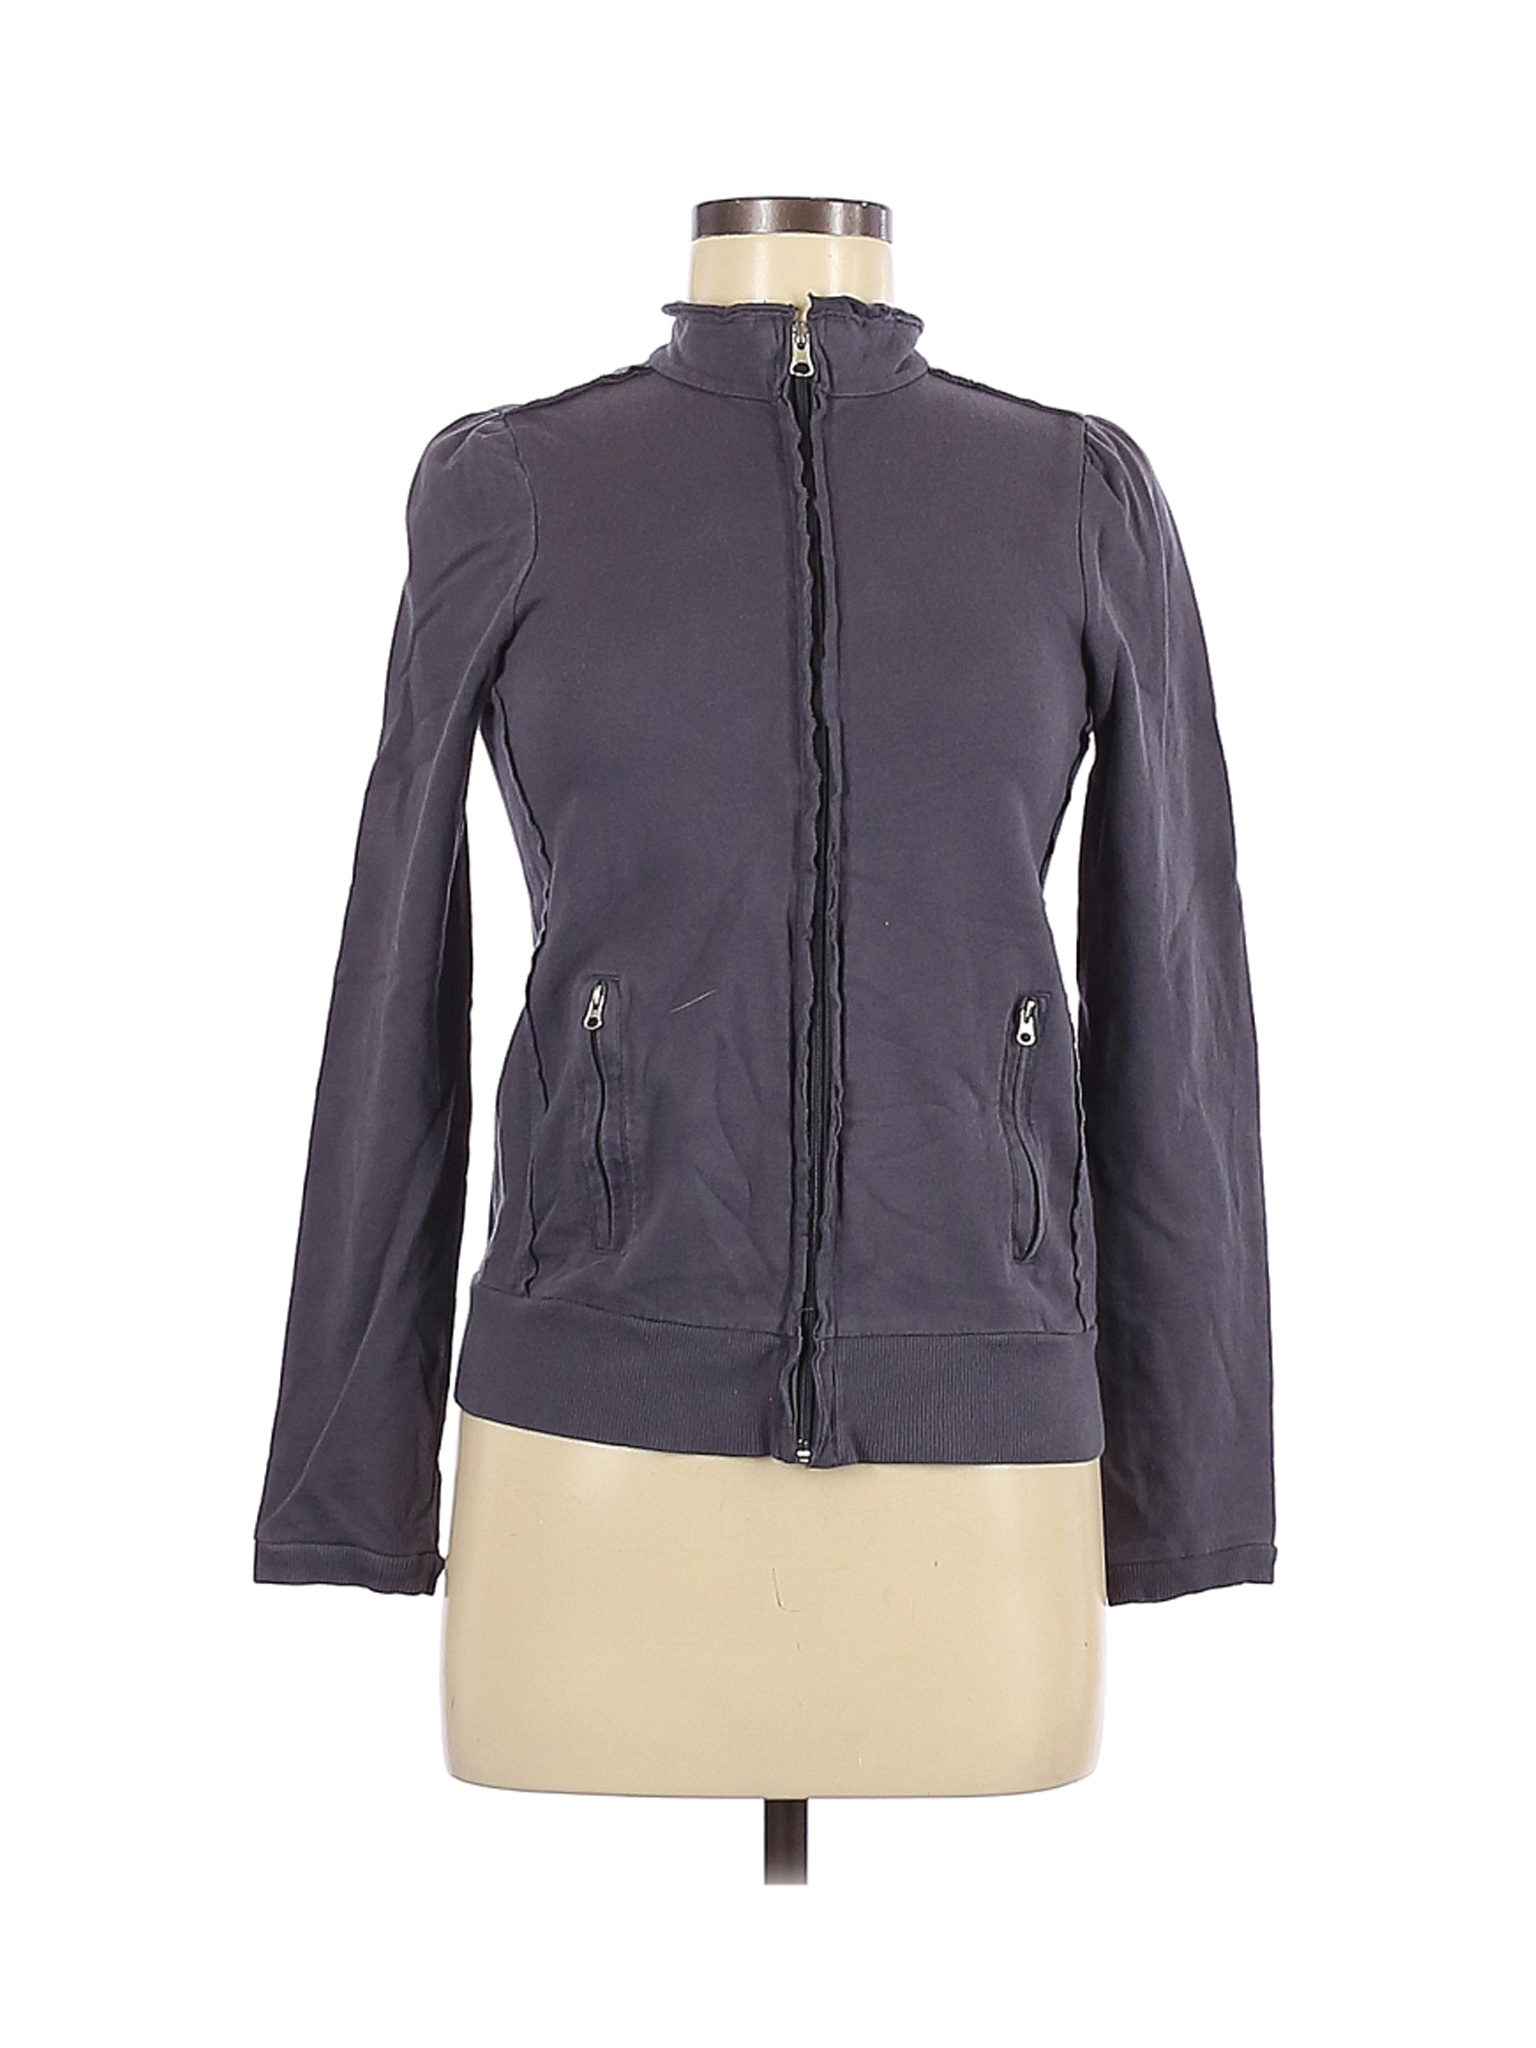 FCUK Women Gray Jacket S | eBay